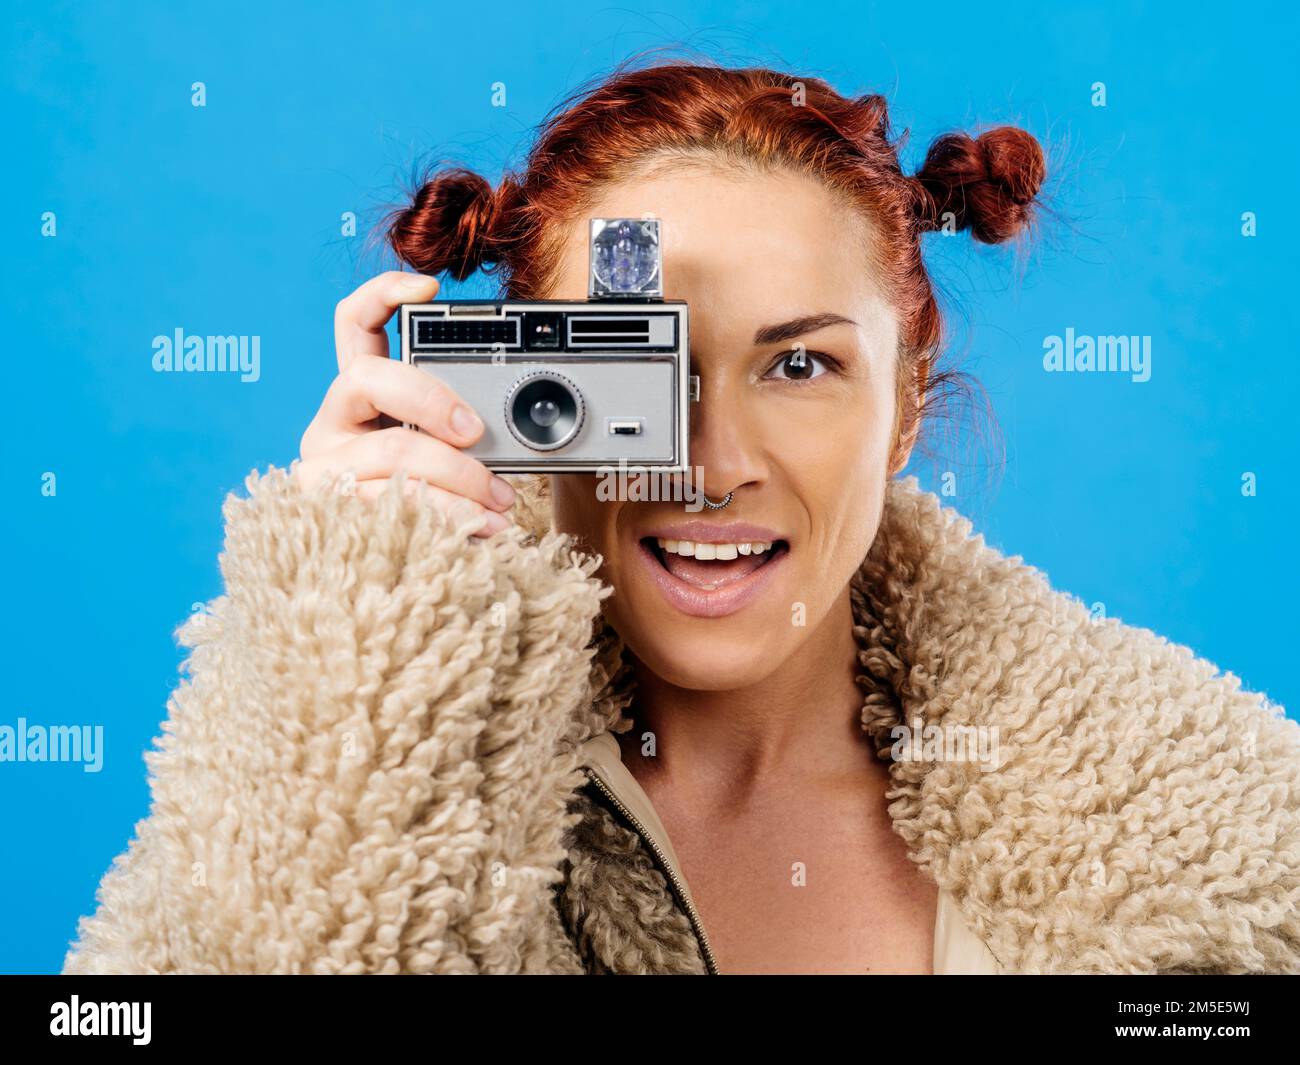 Bella testa rossa con una fotocamera vintage 35mm con flash cubo su sfondo blu. Foto Stock